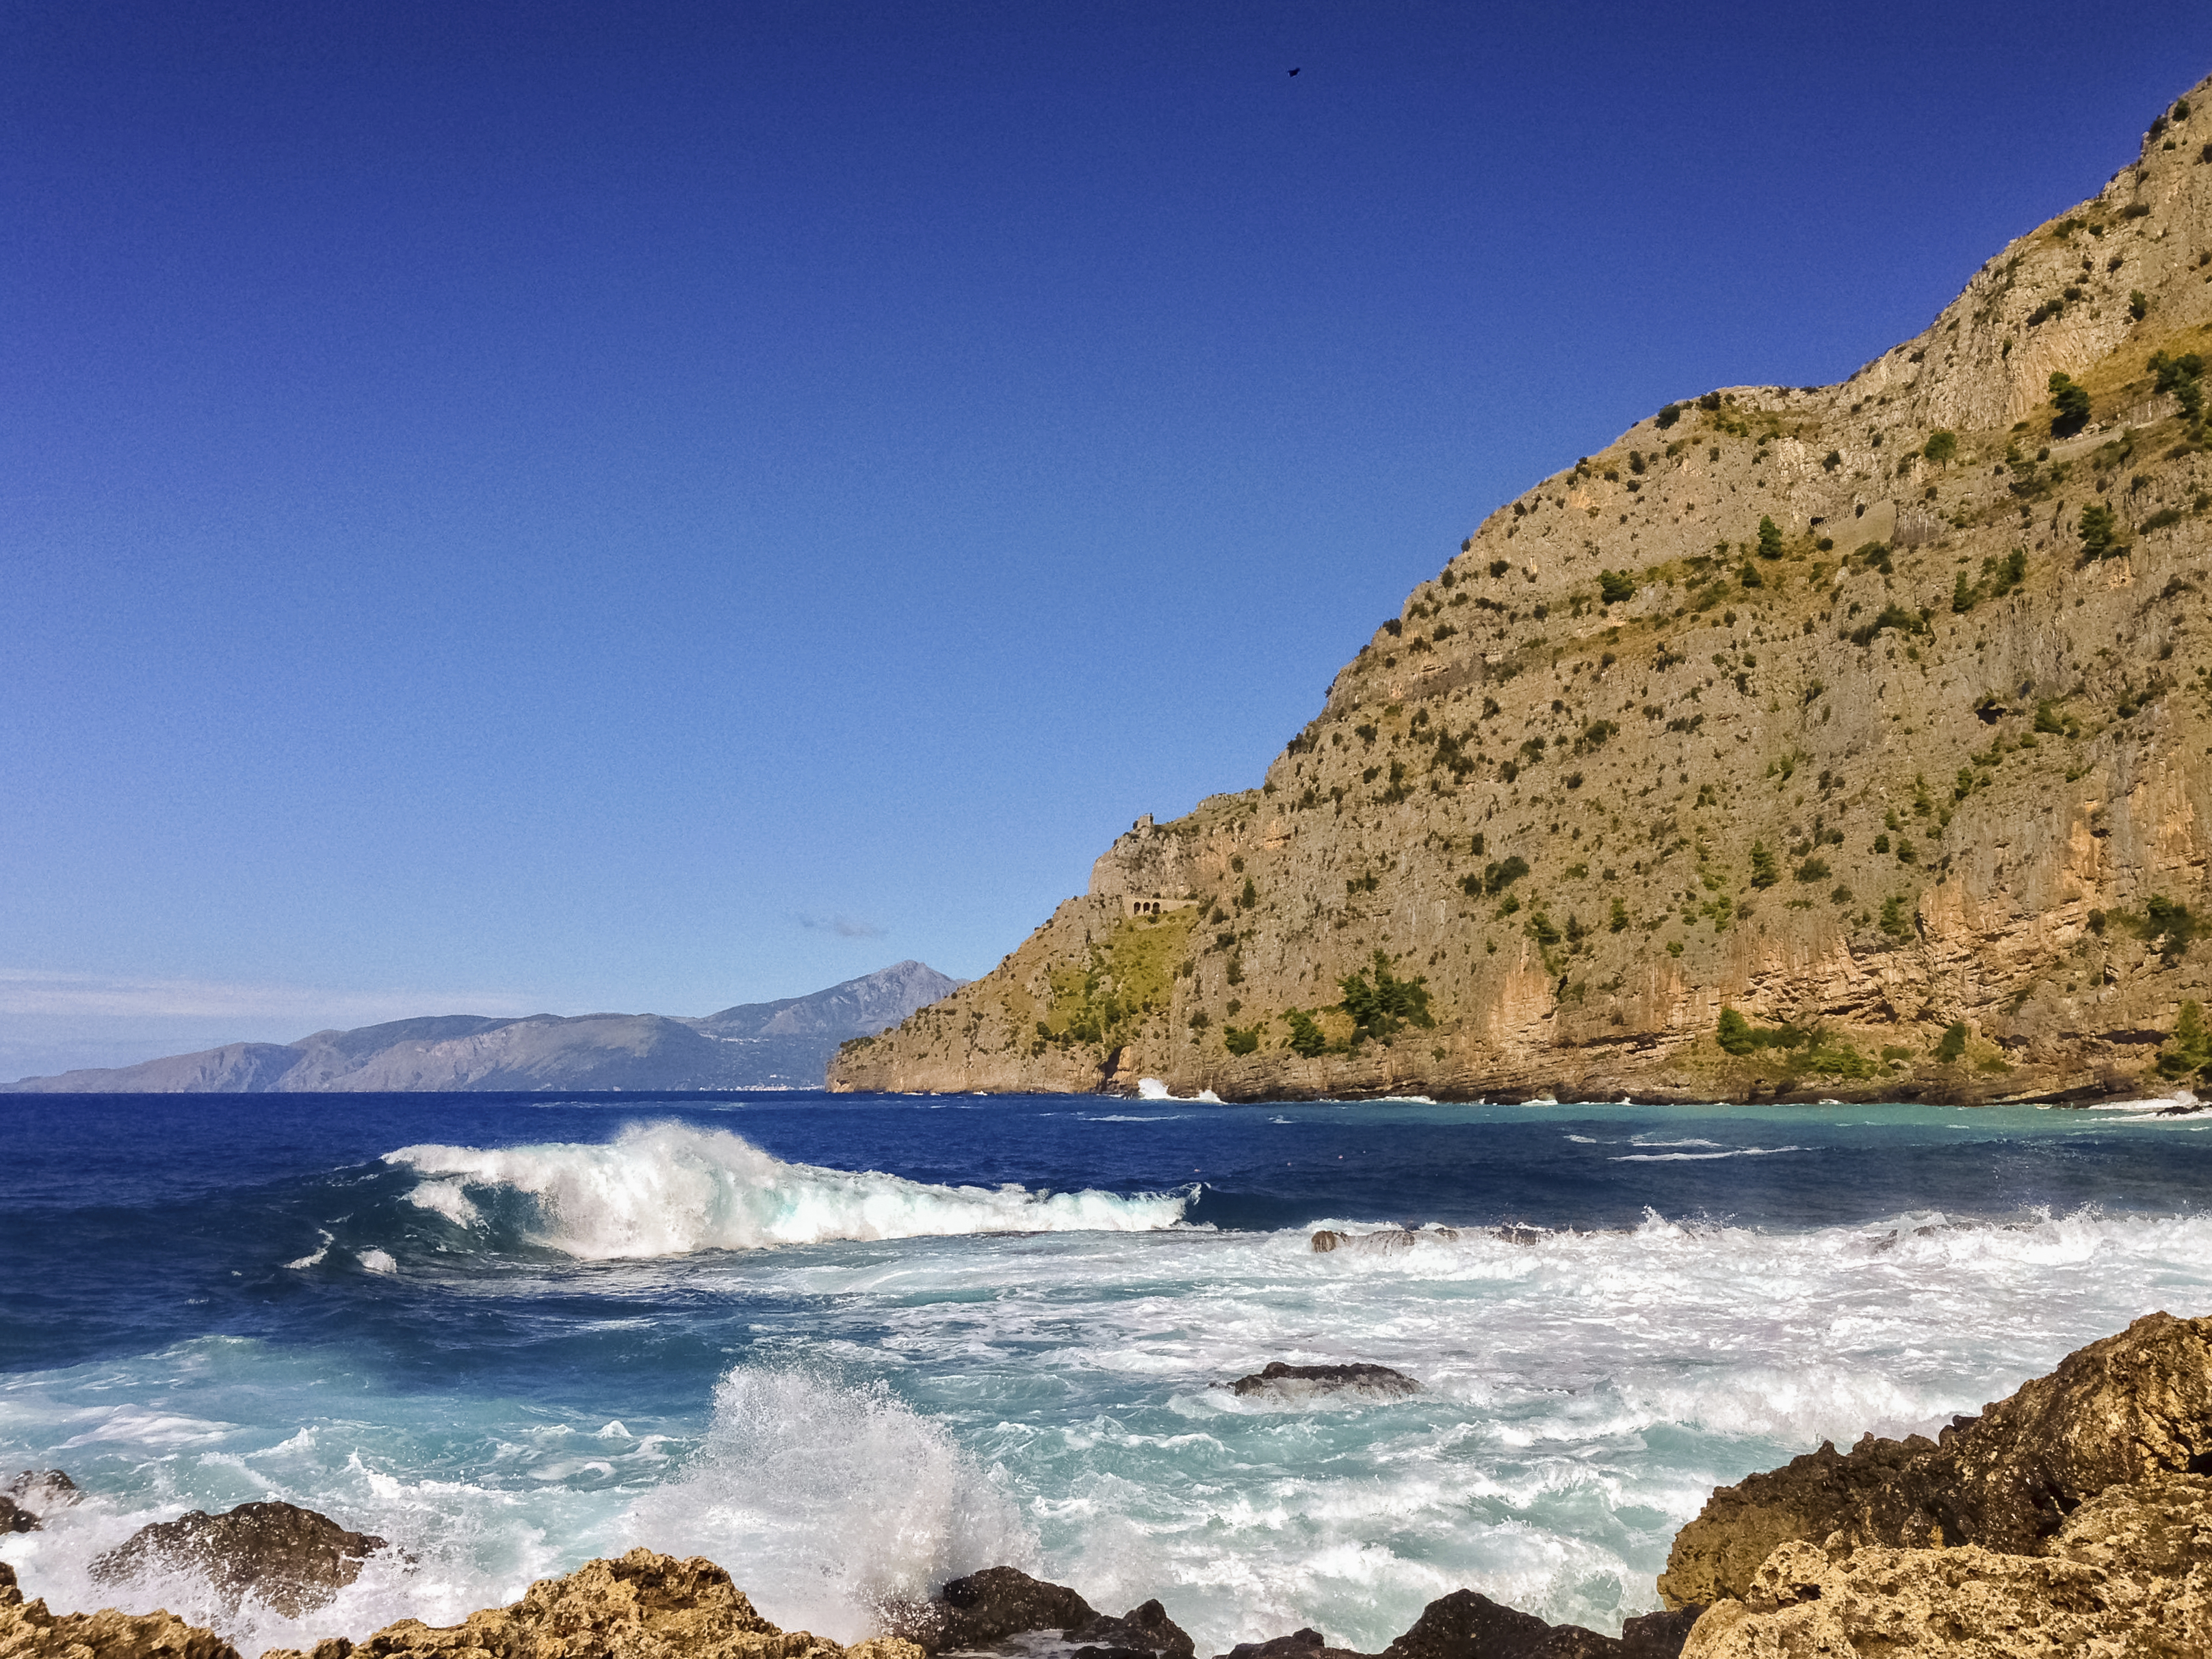 Cliffs near Maratea (southern Italy) and rough sea